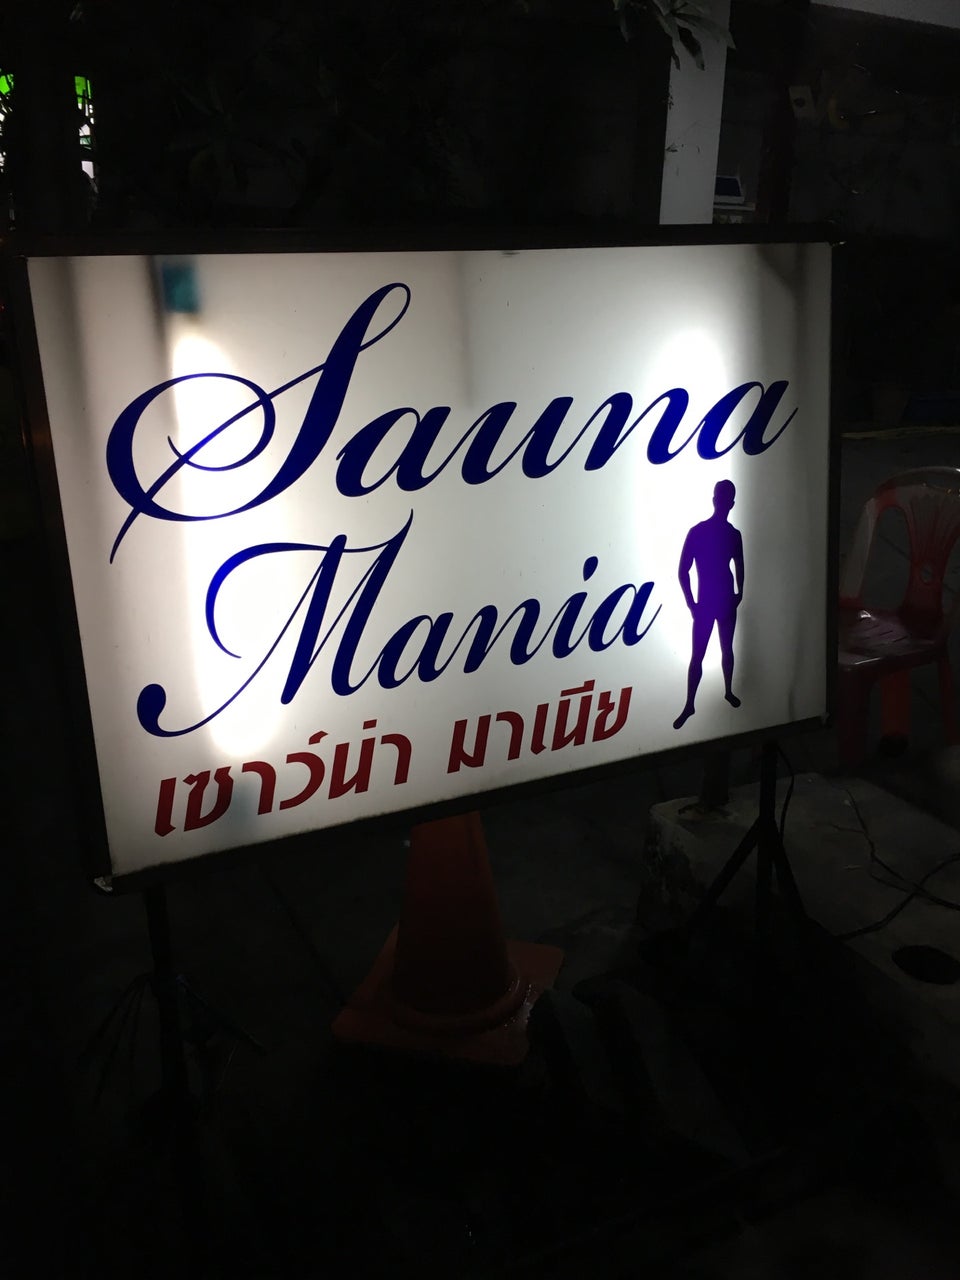 Photo of Sauna Mania